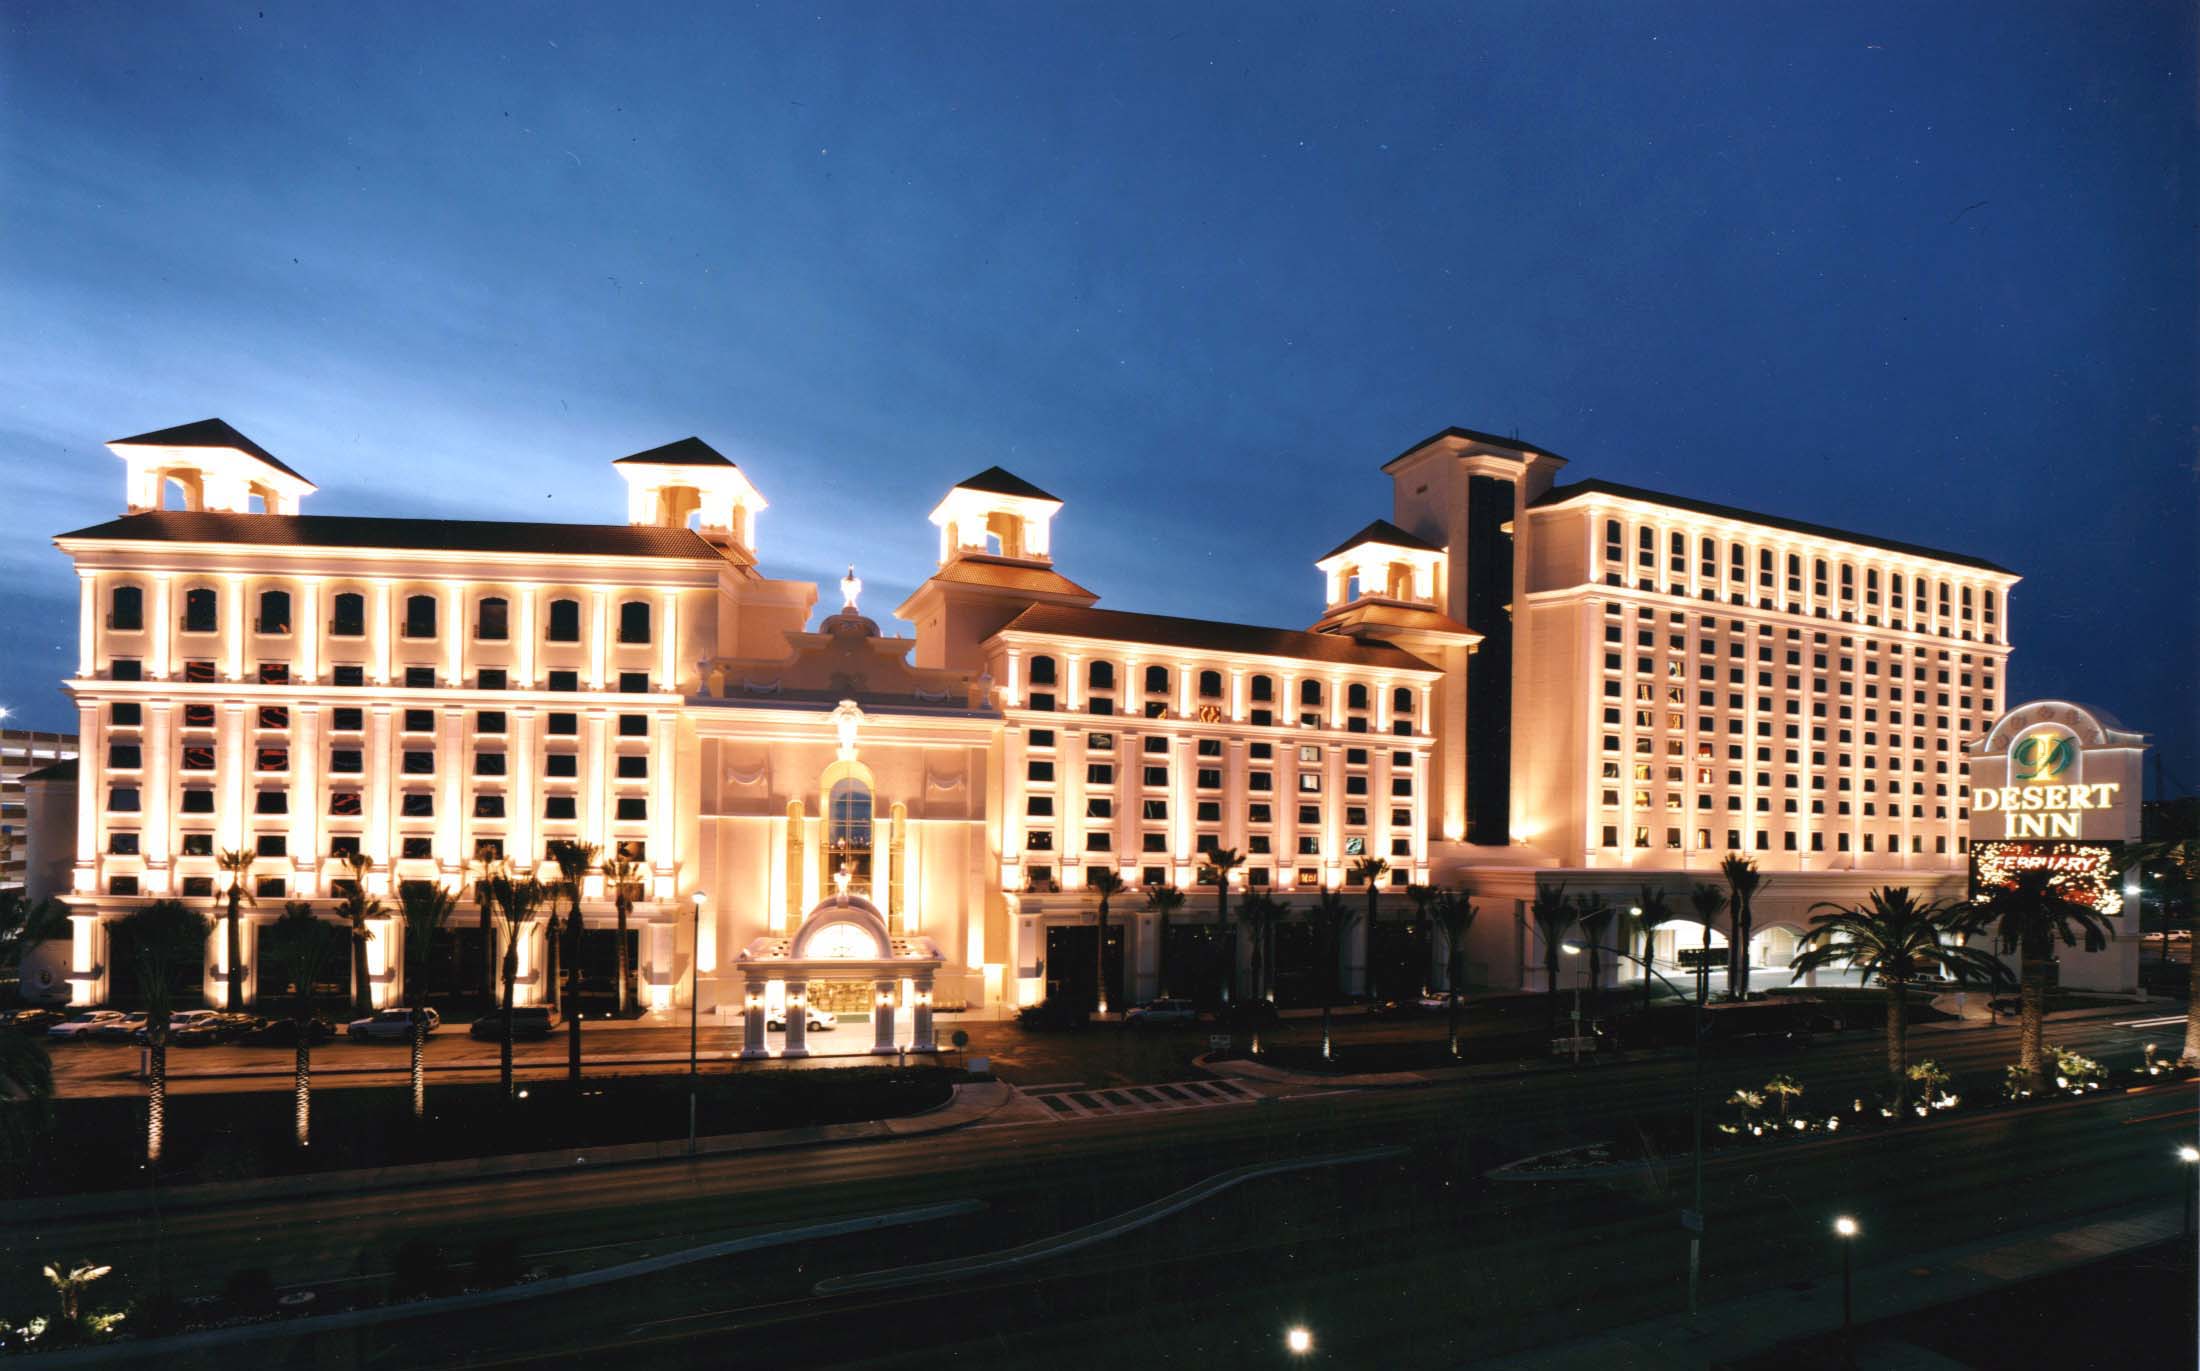 Fitzgerald's Hotel and Casino, CasinoCyclopedia